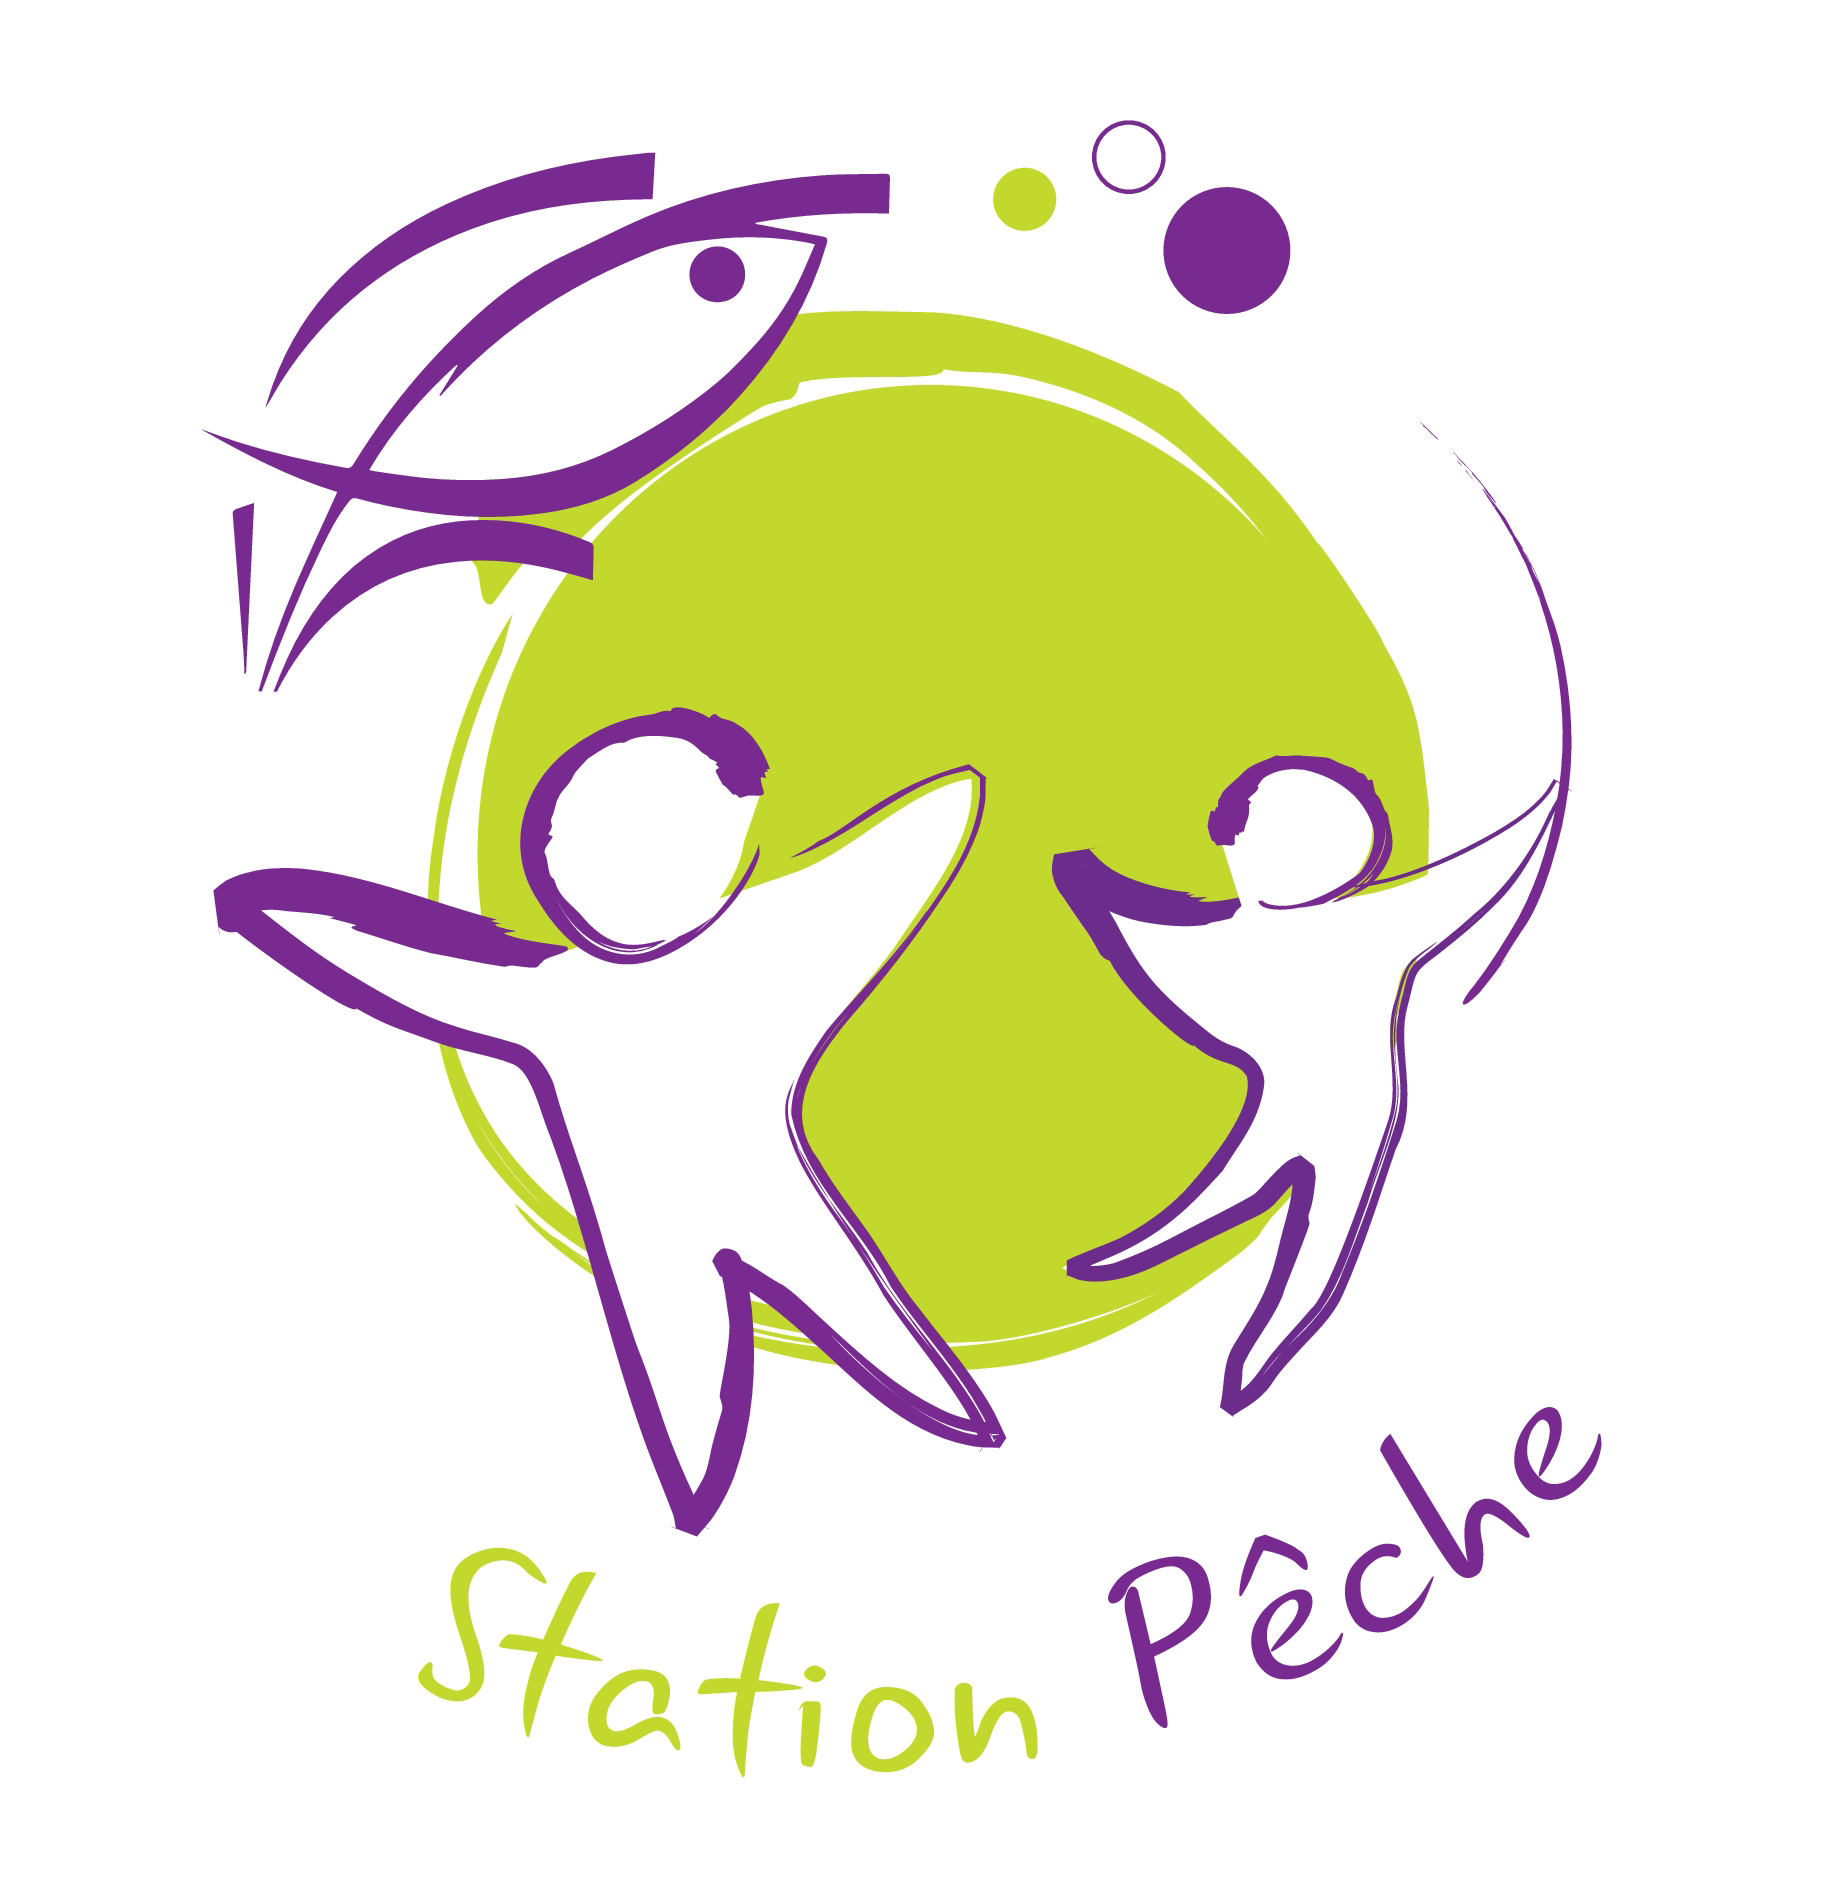 station peche